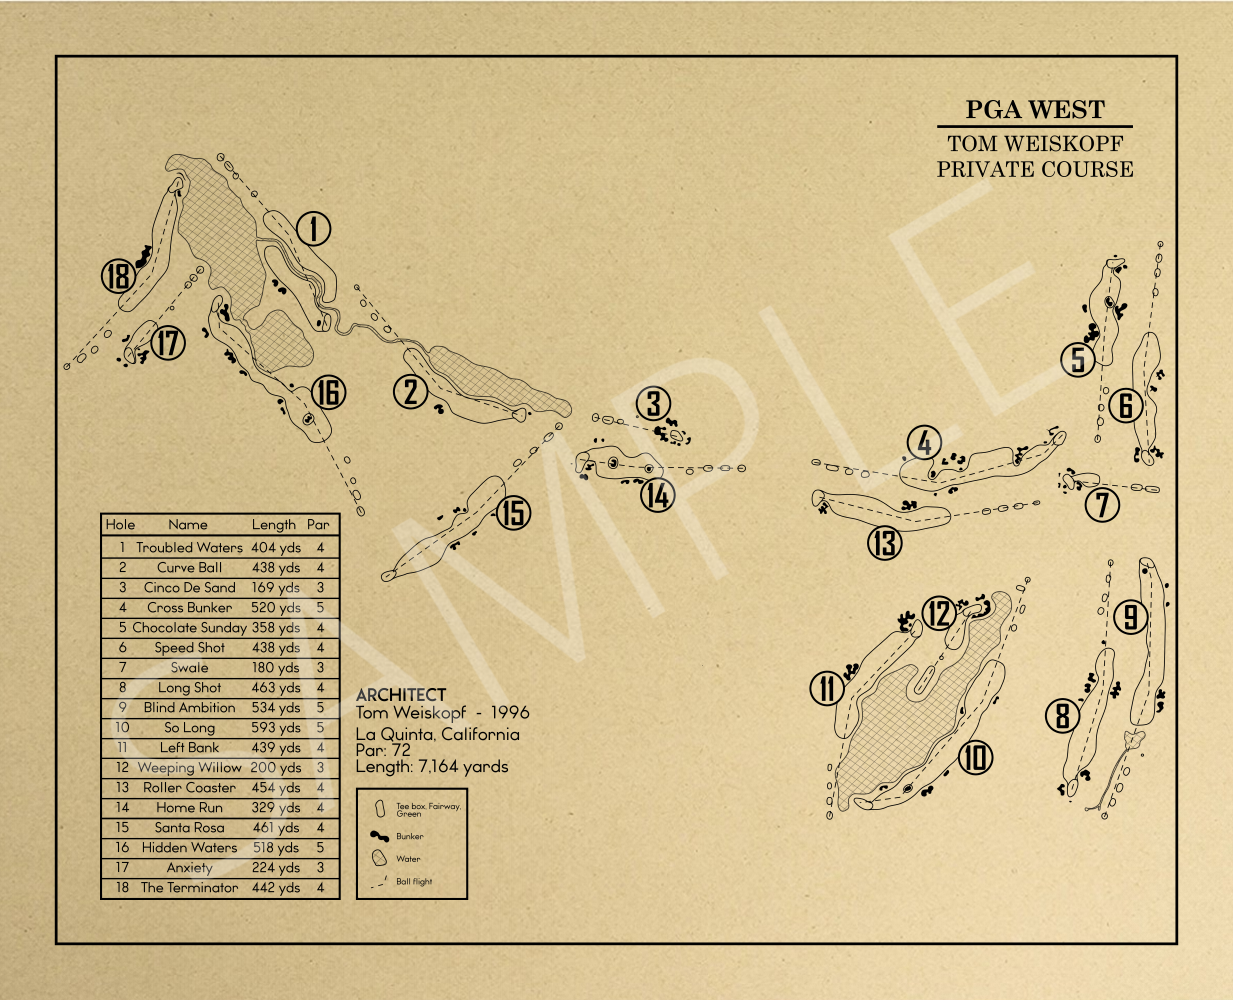 PGA West Tom Weiskopf Private Course Outline (Print)